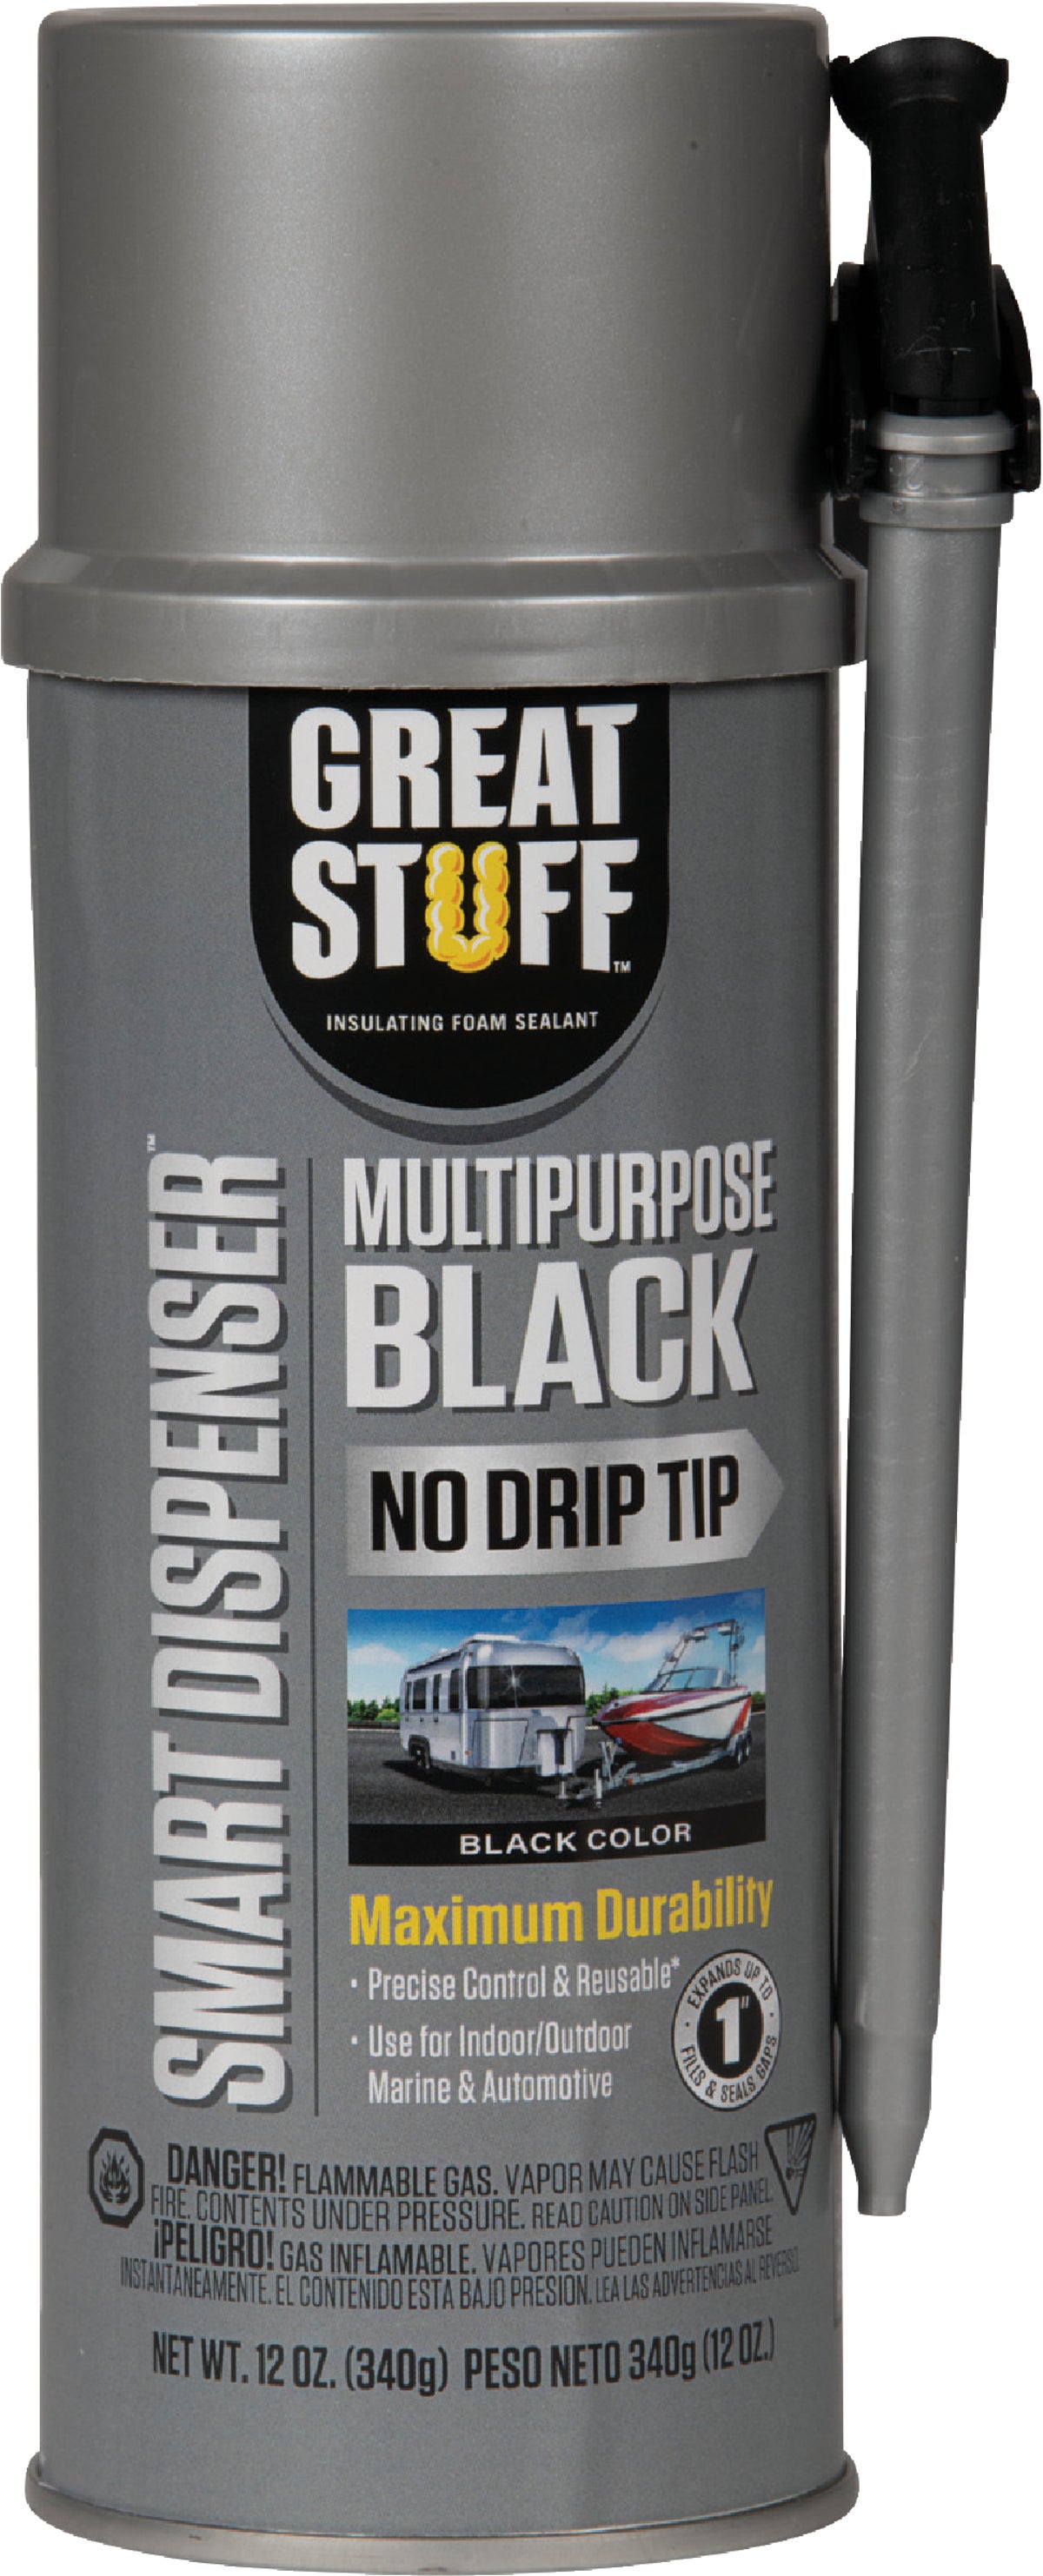 Great Stuff Black Multipurpose Insulating Foam Sealant, 12 oz.